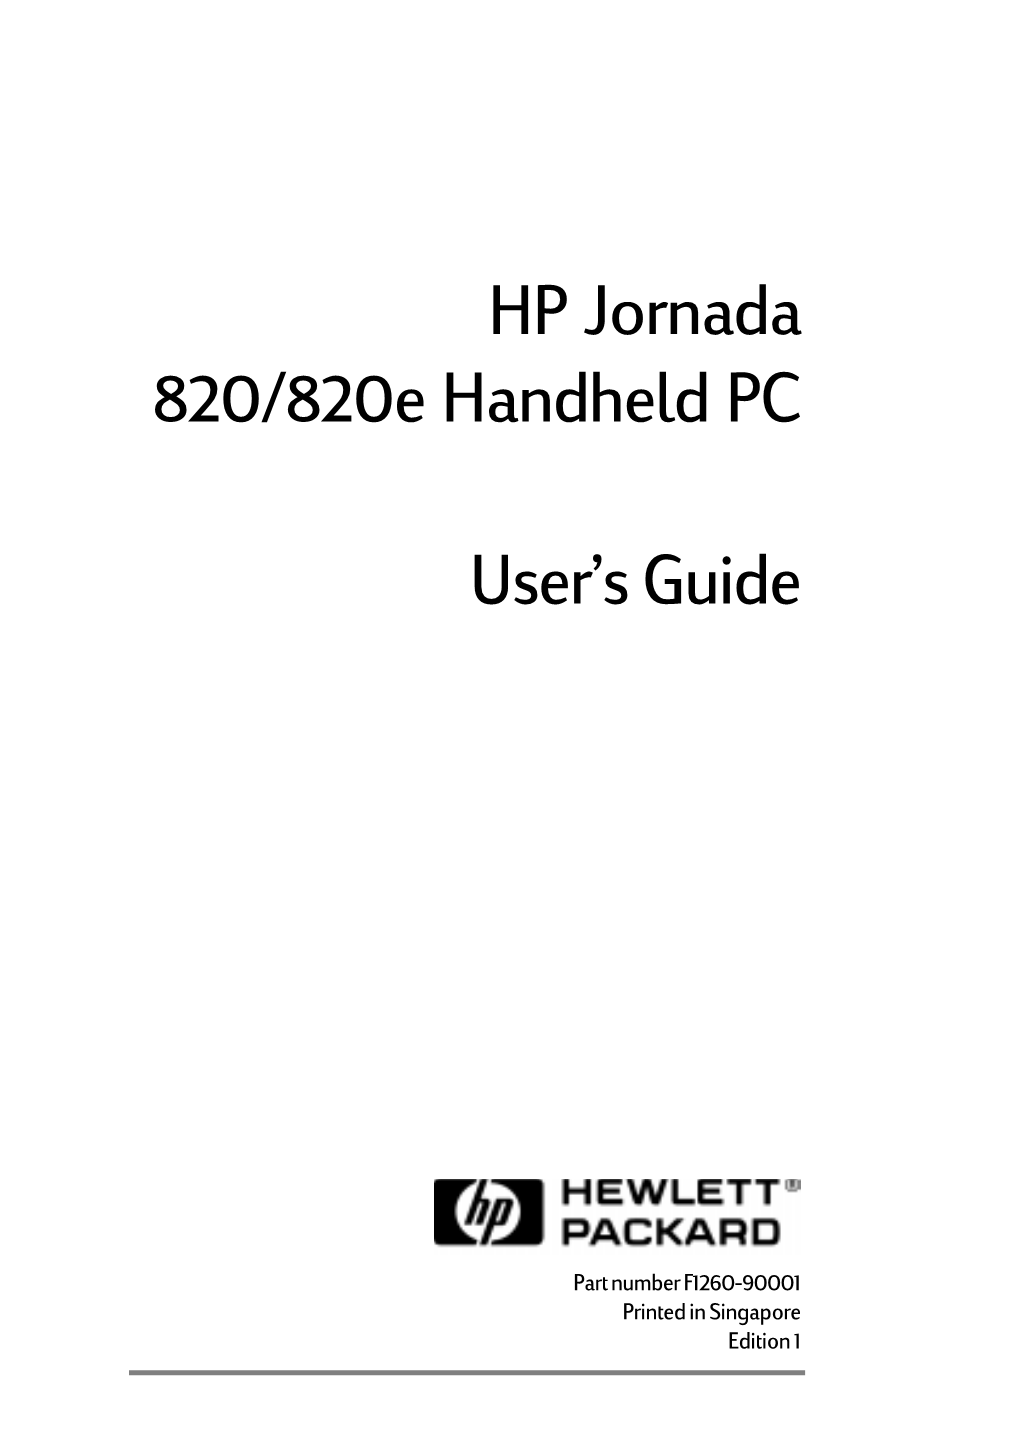 HP Jornada 820/820E Handheld PC User's Guide